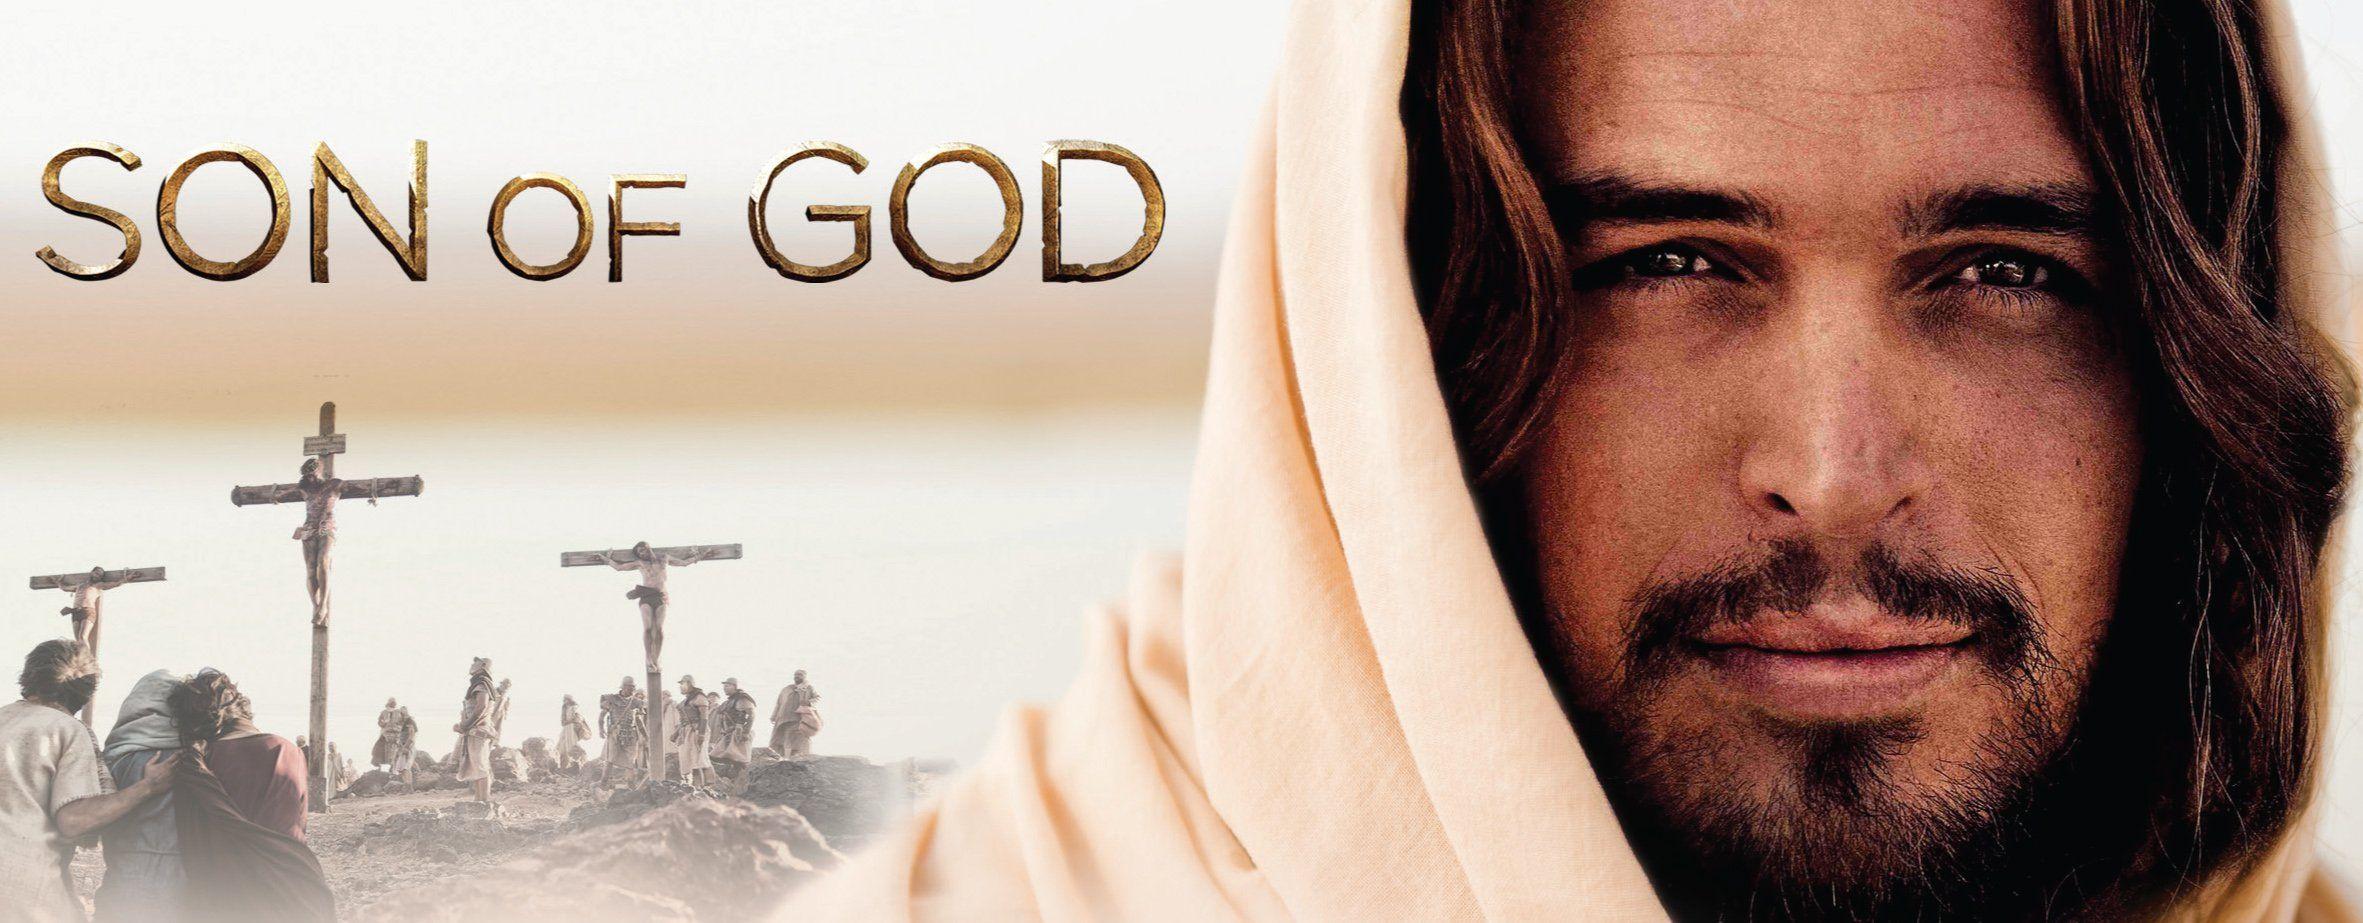 SON OF GOD Drama Religion Movie Film Christian God Son Jesus